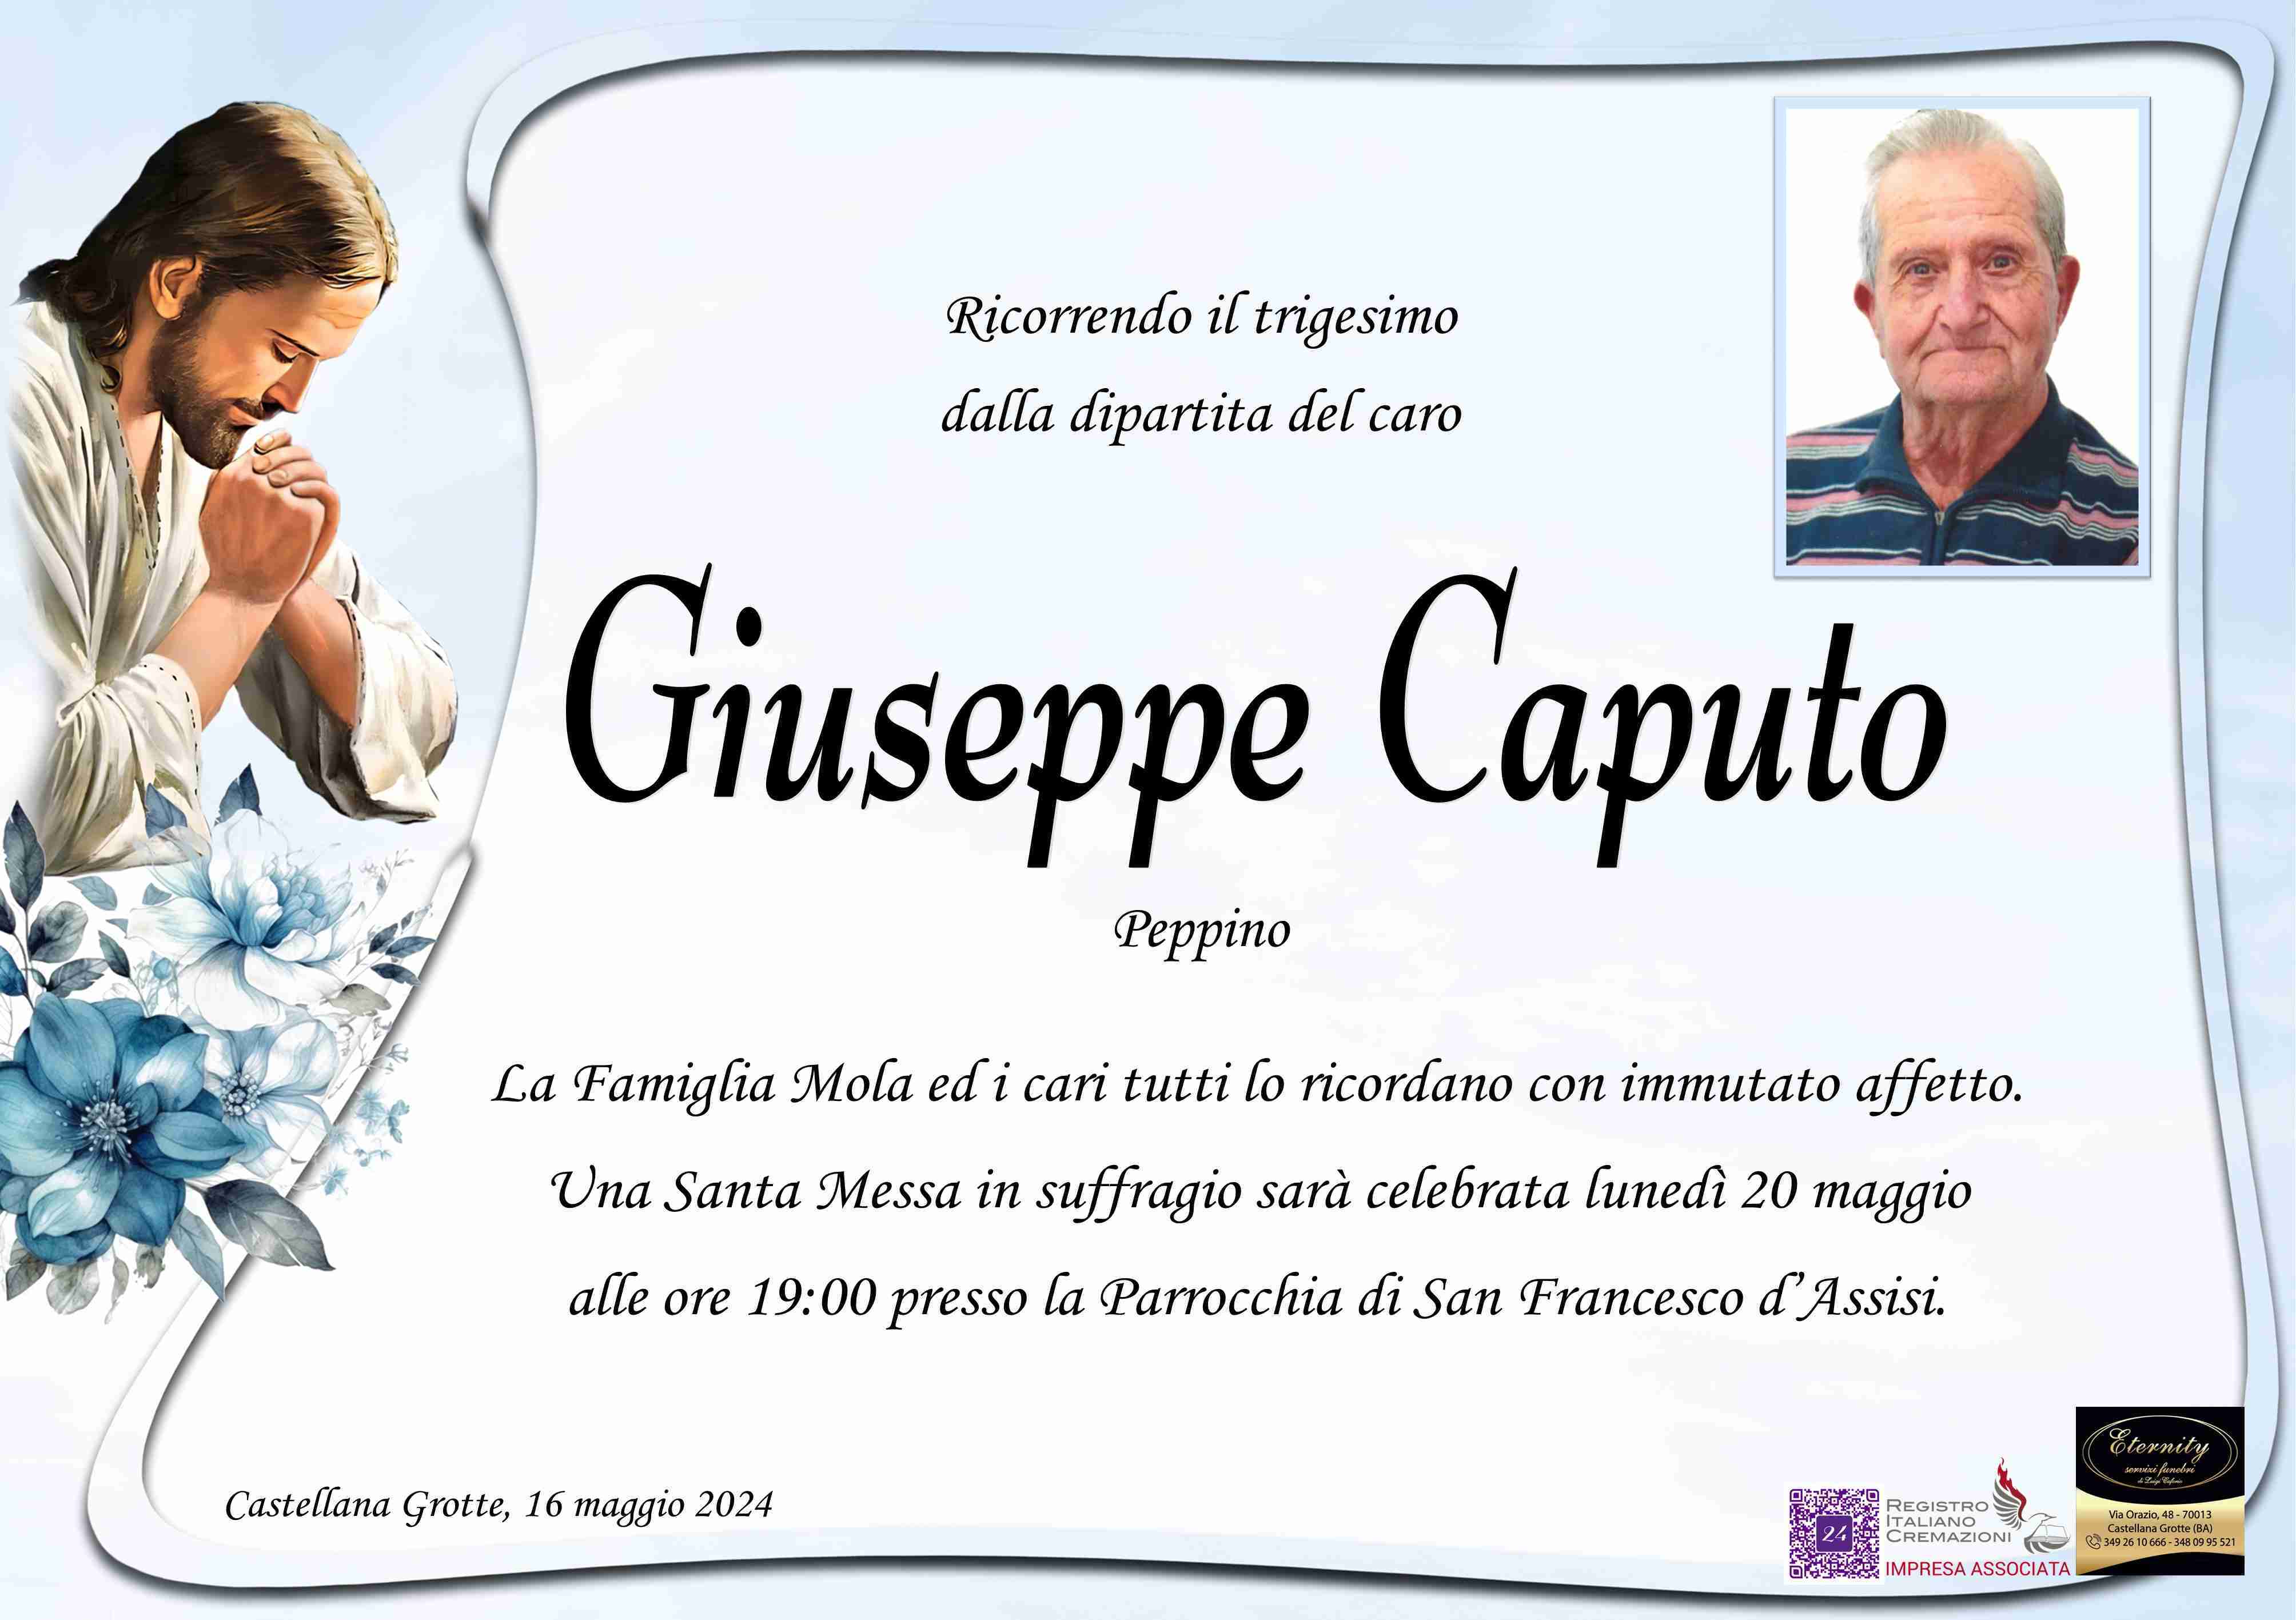 Giuseppe Caputo